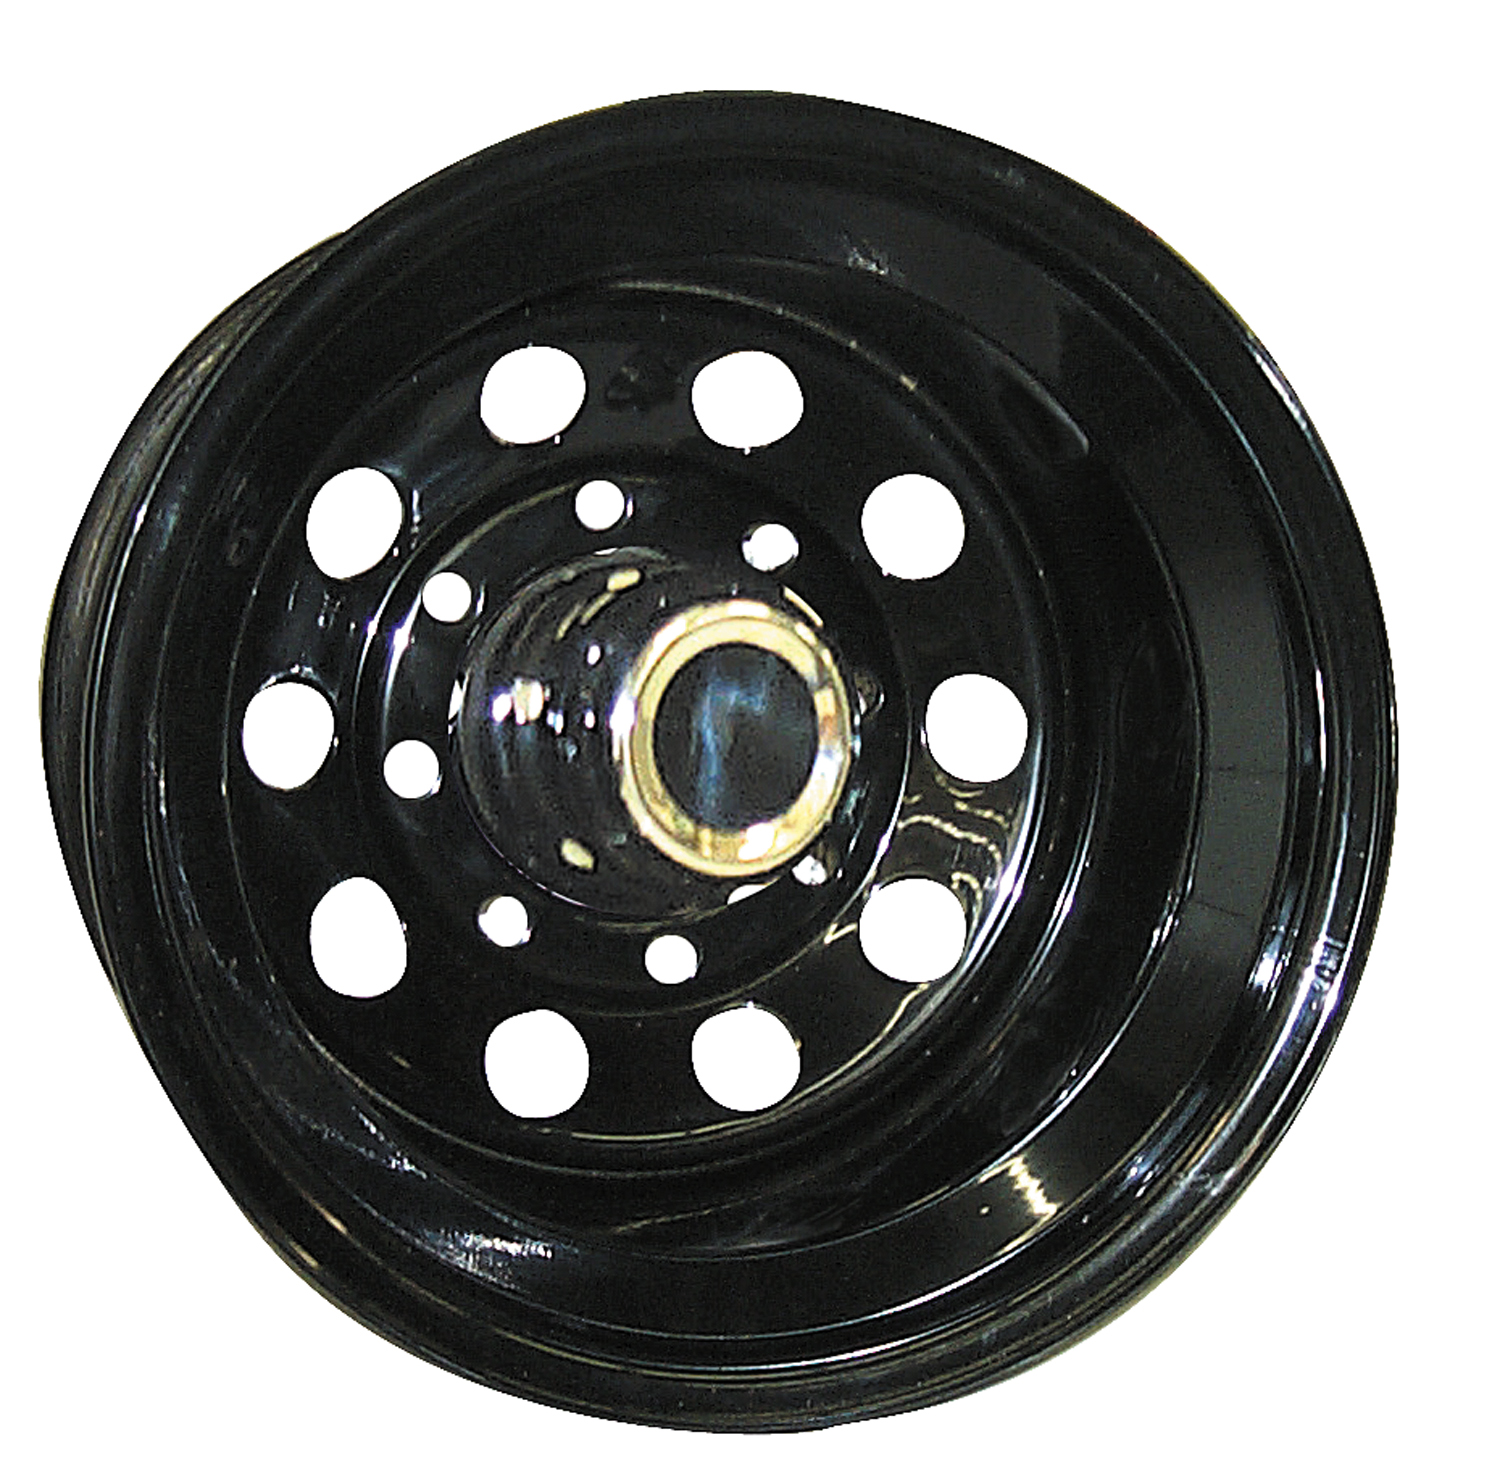 Pro Comp Wheels Pro Comp Wheels 87-6756 Rock Crawler Series 87 Black Monster Mod Wheel